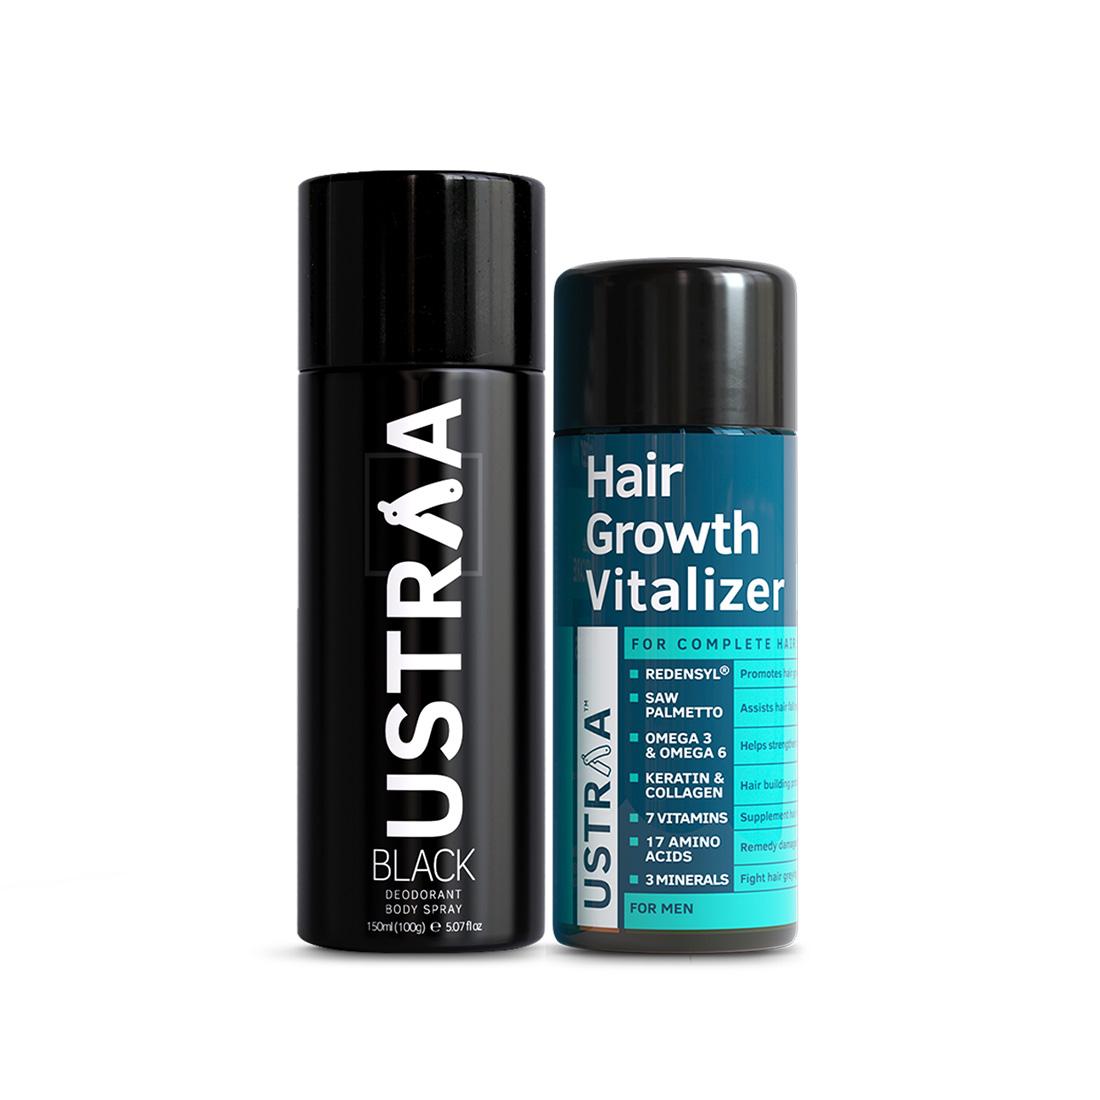 Black Deodorant Body Spray 150 ml  & Hair Growth Vitalizer 100 ml